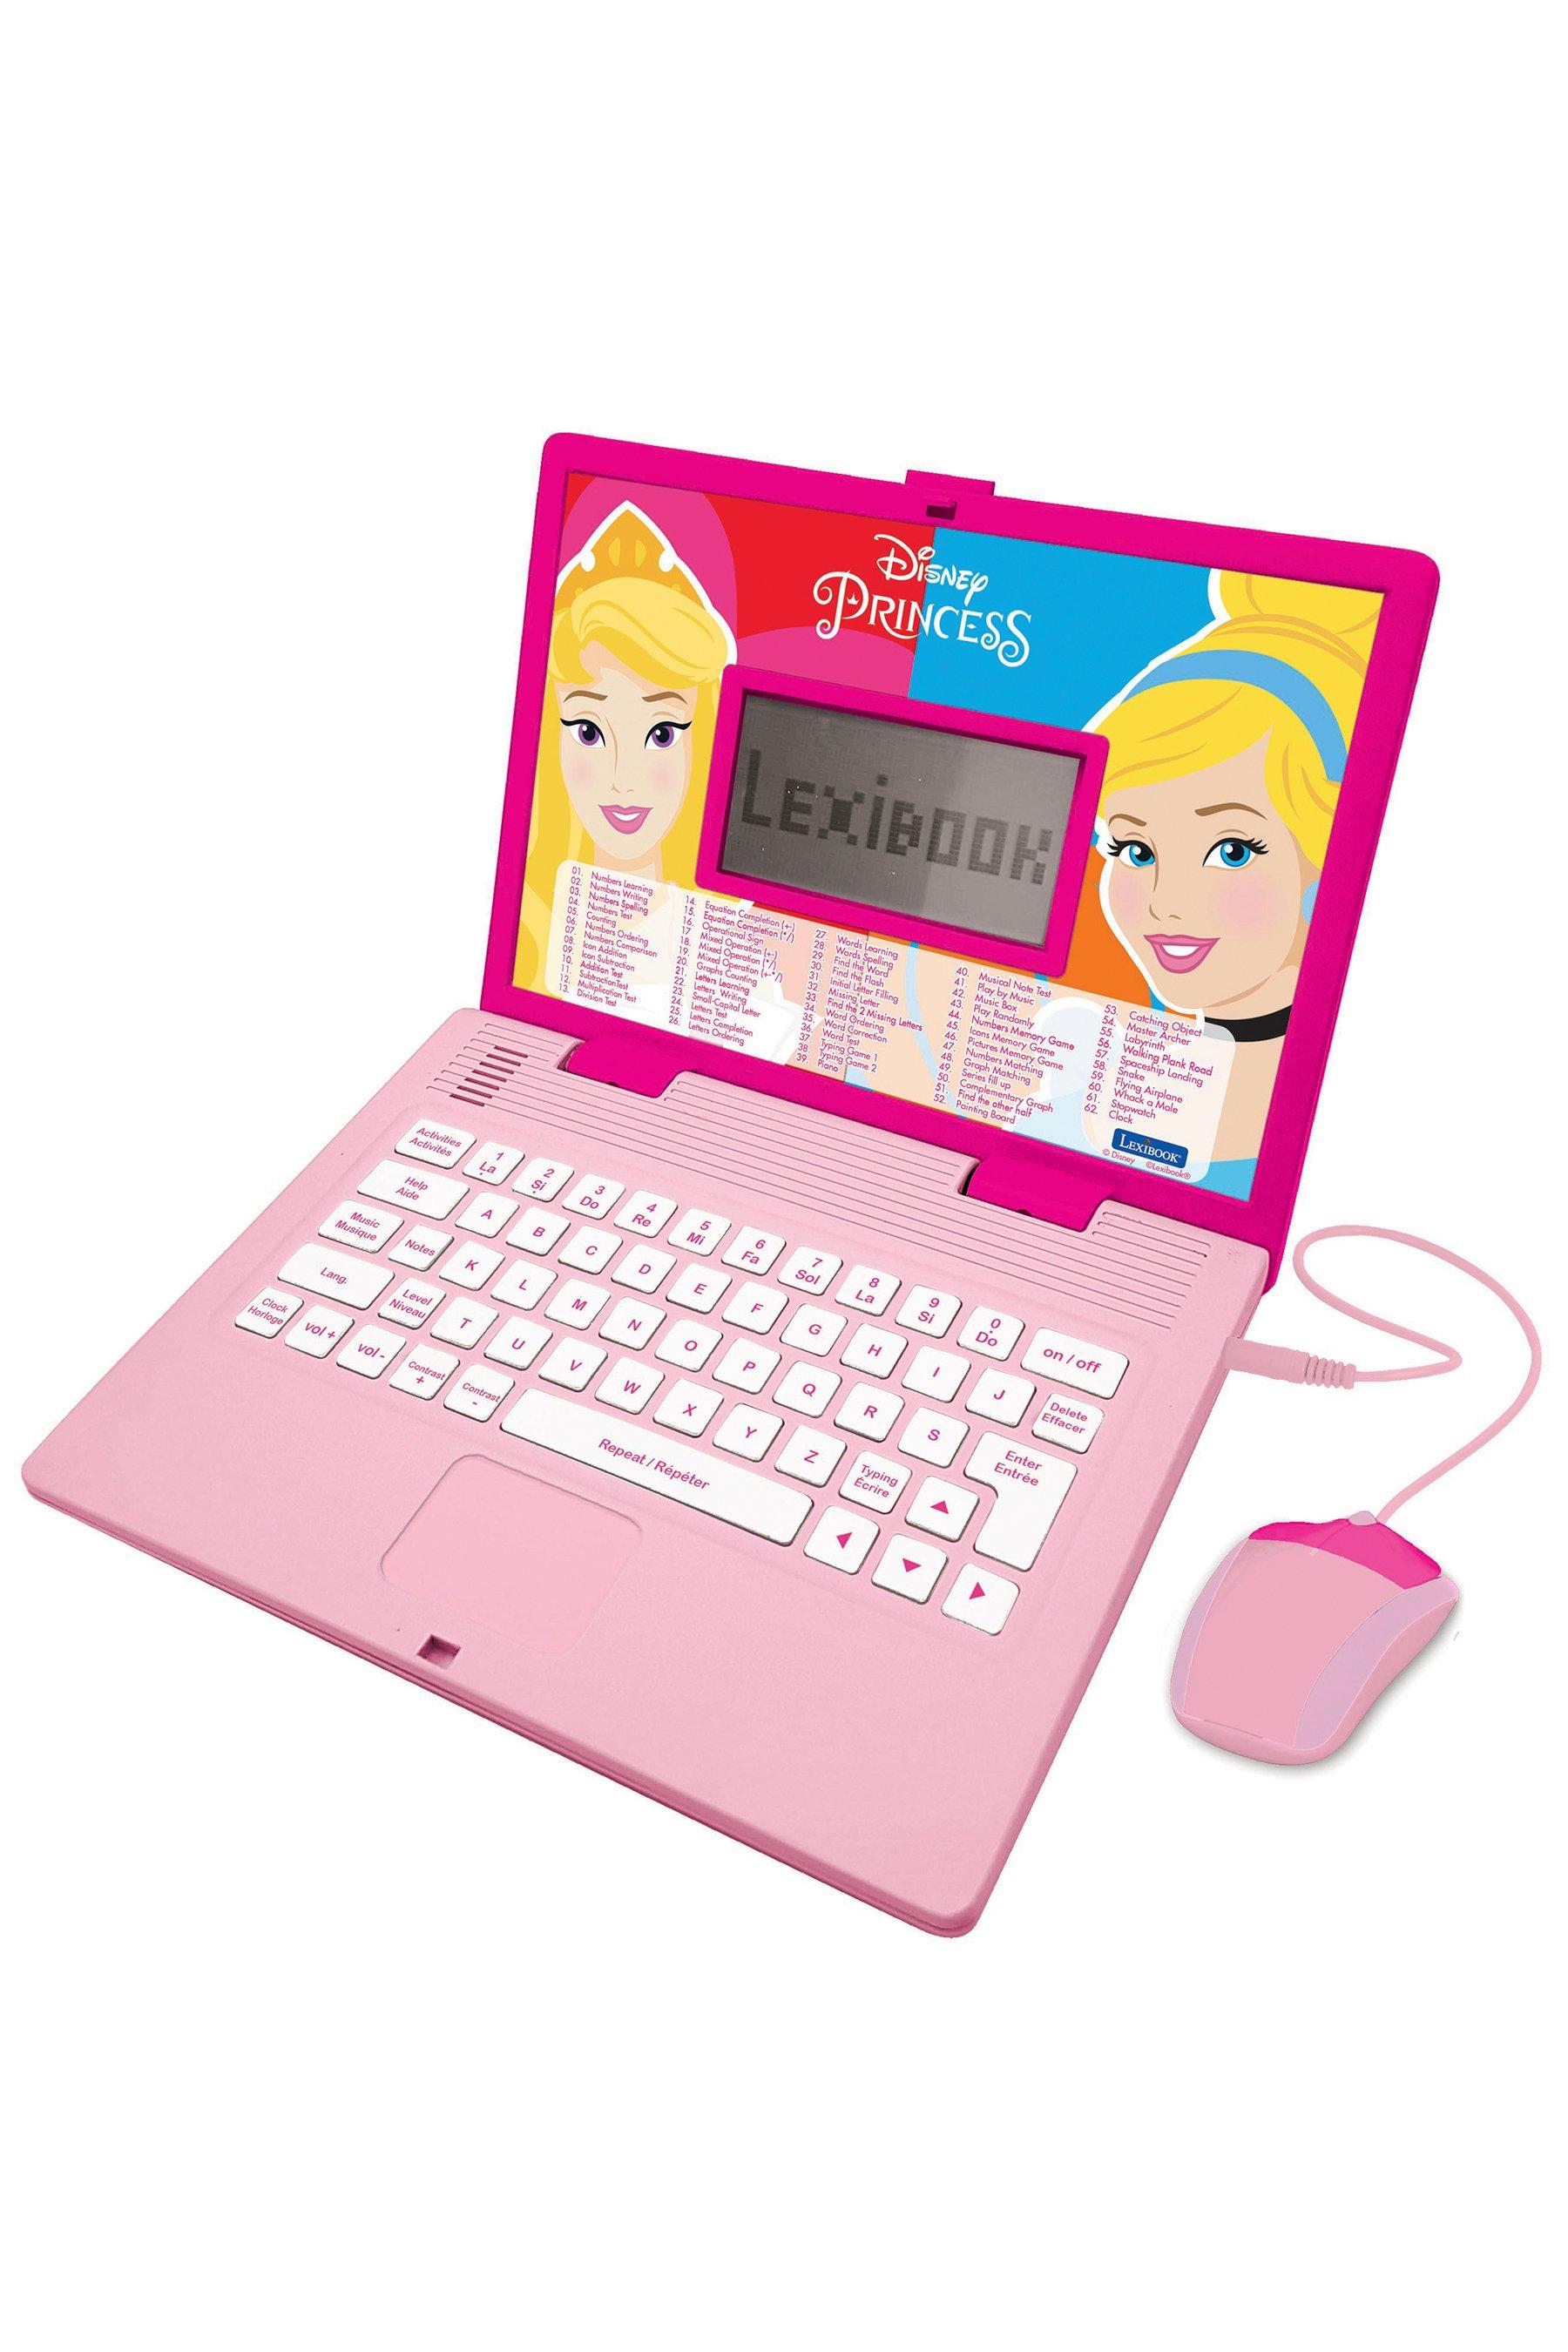 lexibook educational laptop disney princess - pink